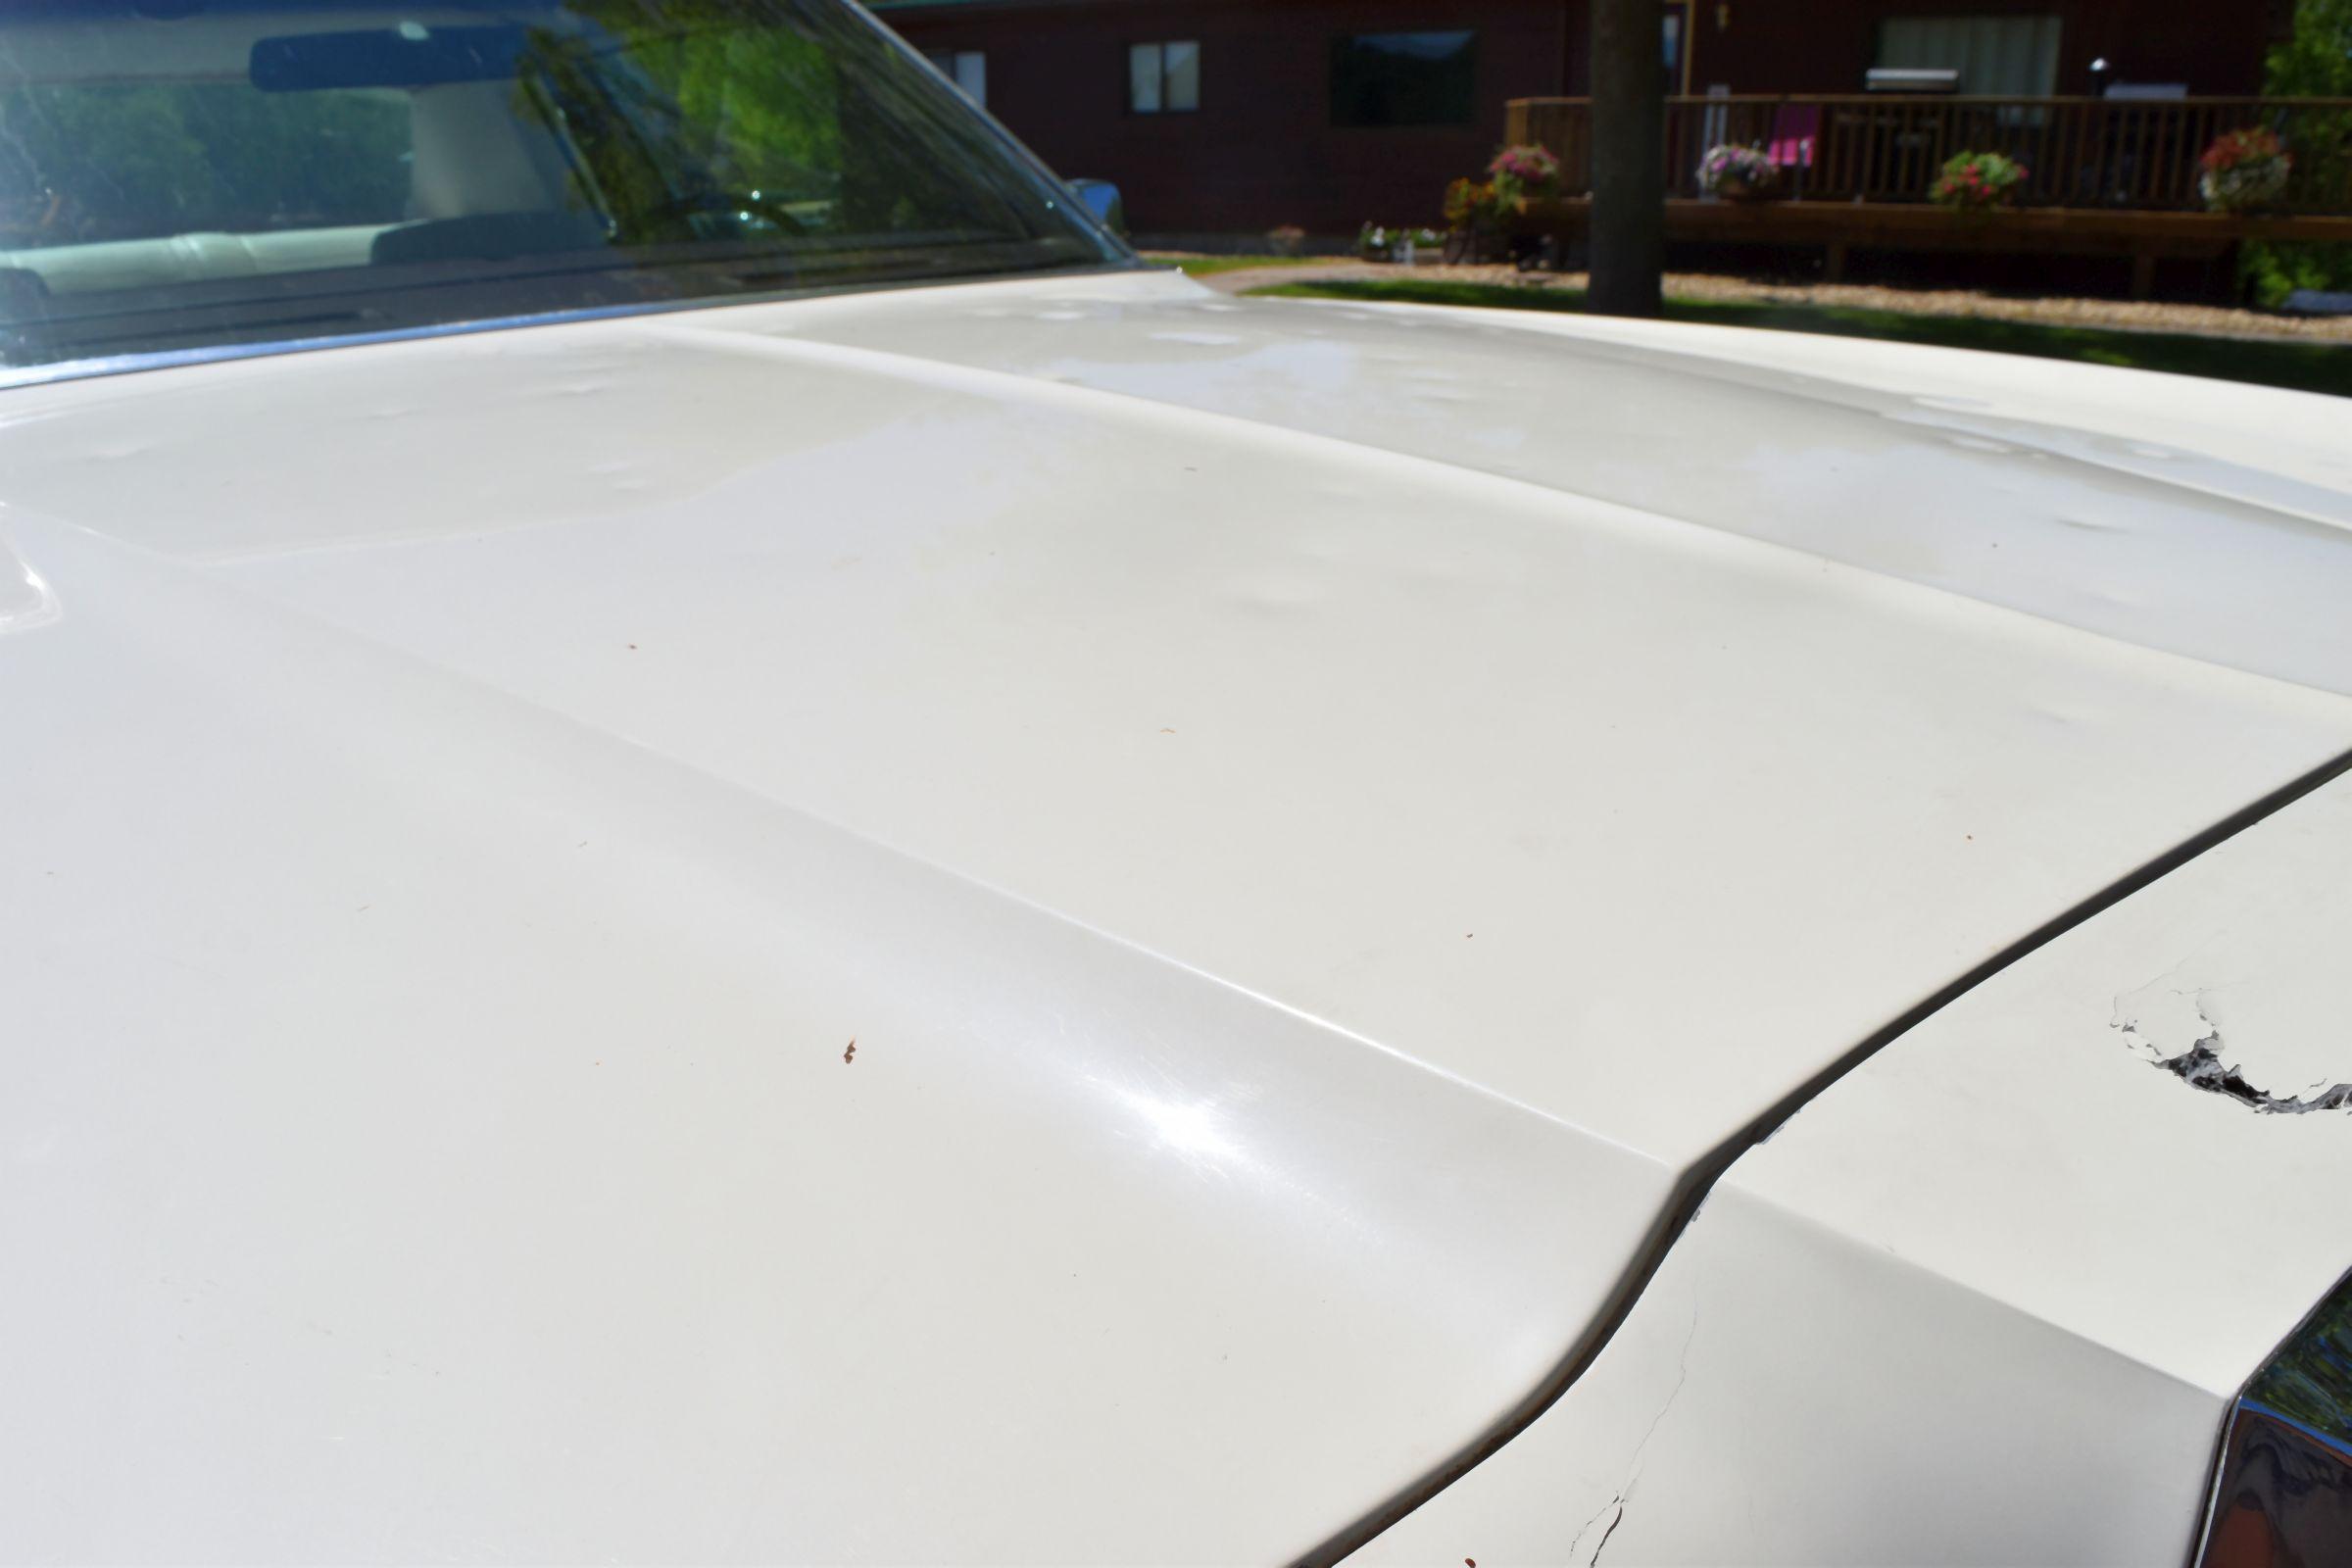 1976 Chrysler Newport Custom 2 Door Car, White In Color, 44,050 Miles, Original Miles, White Leather